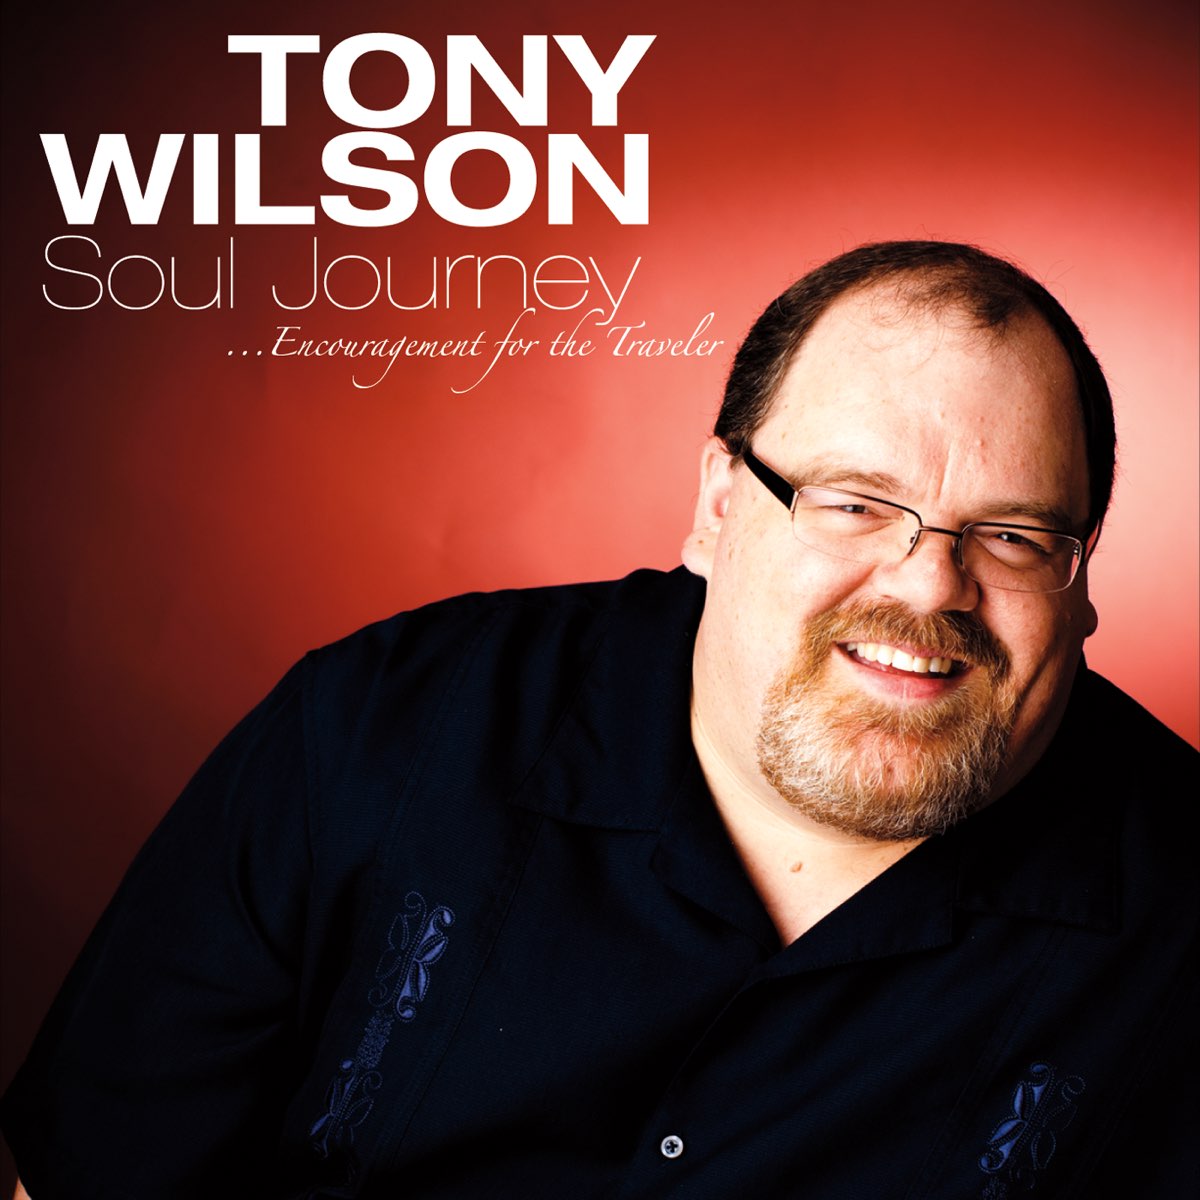 Tony Wilson. Soul journey